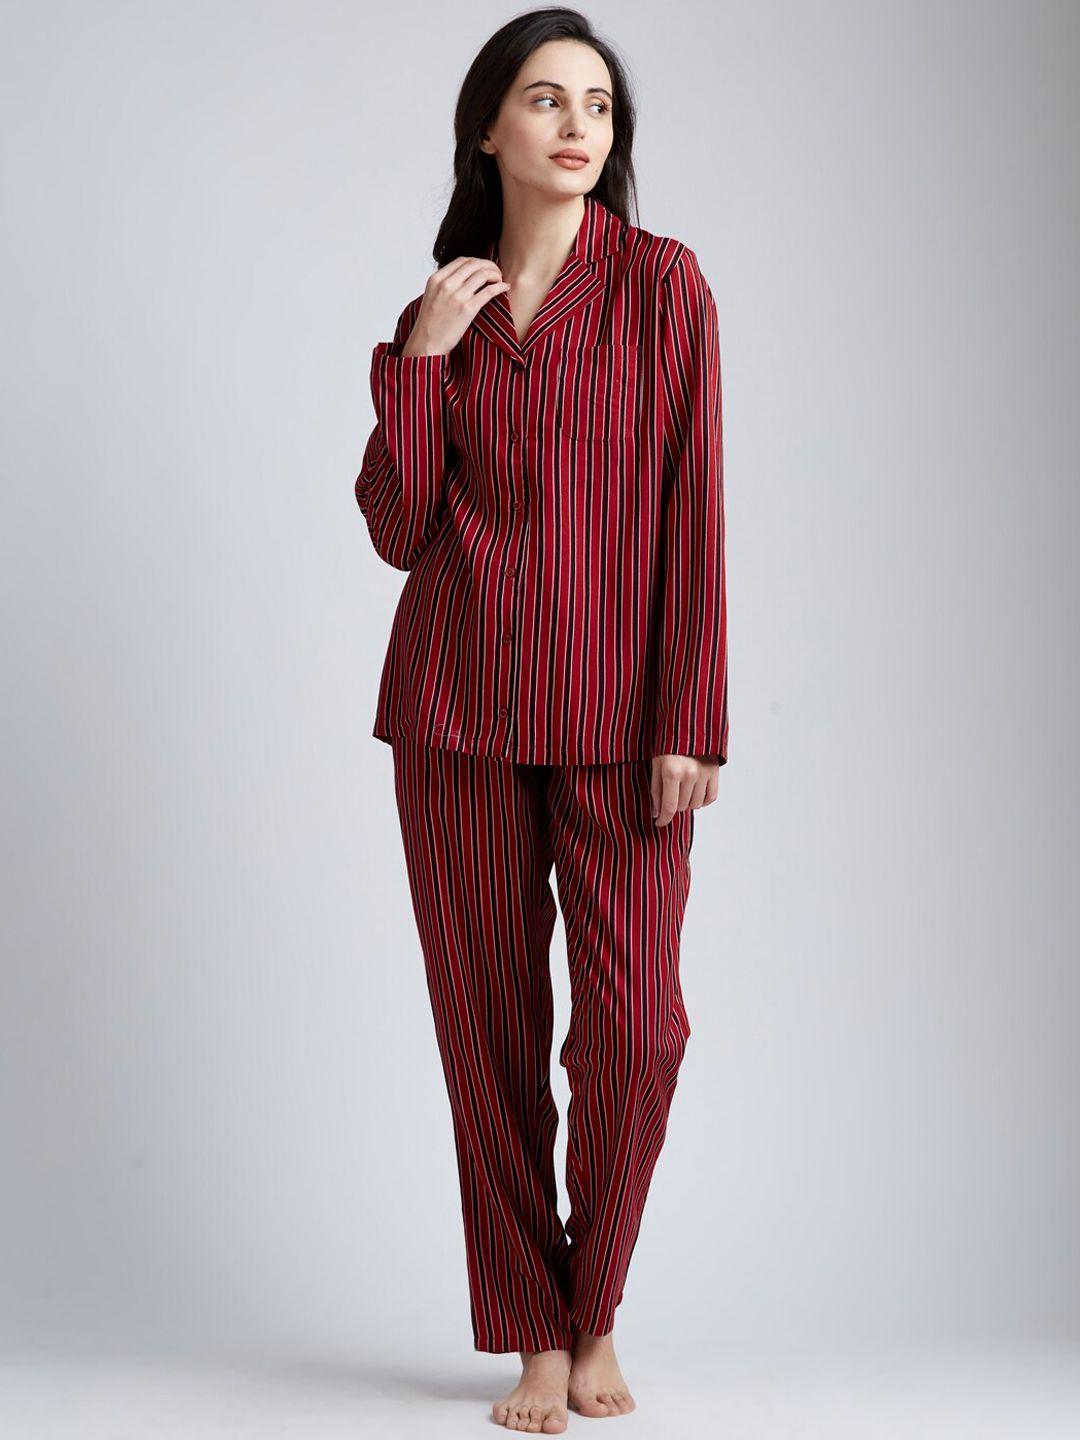 drape in vogue women red & black striped night suit